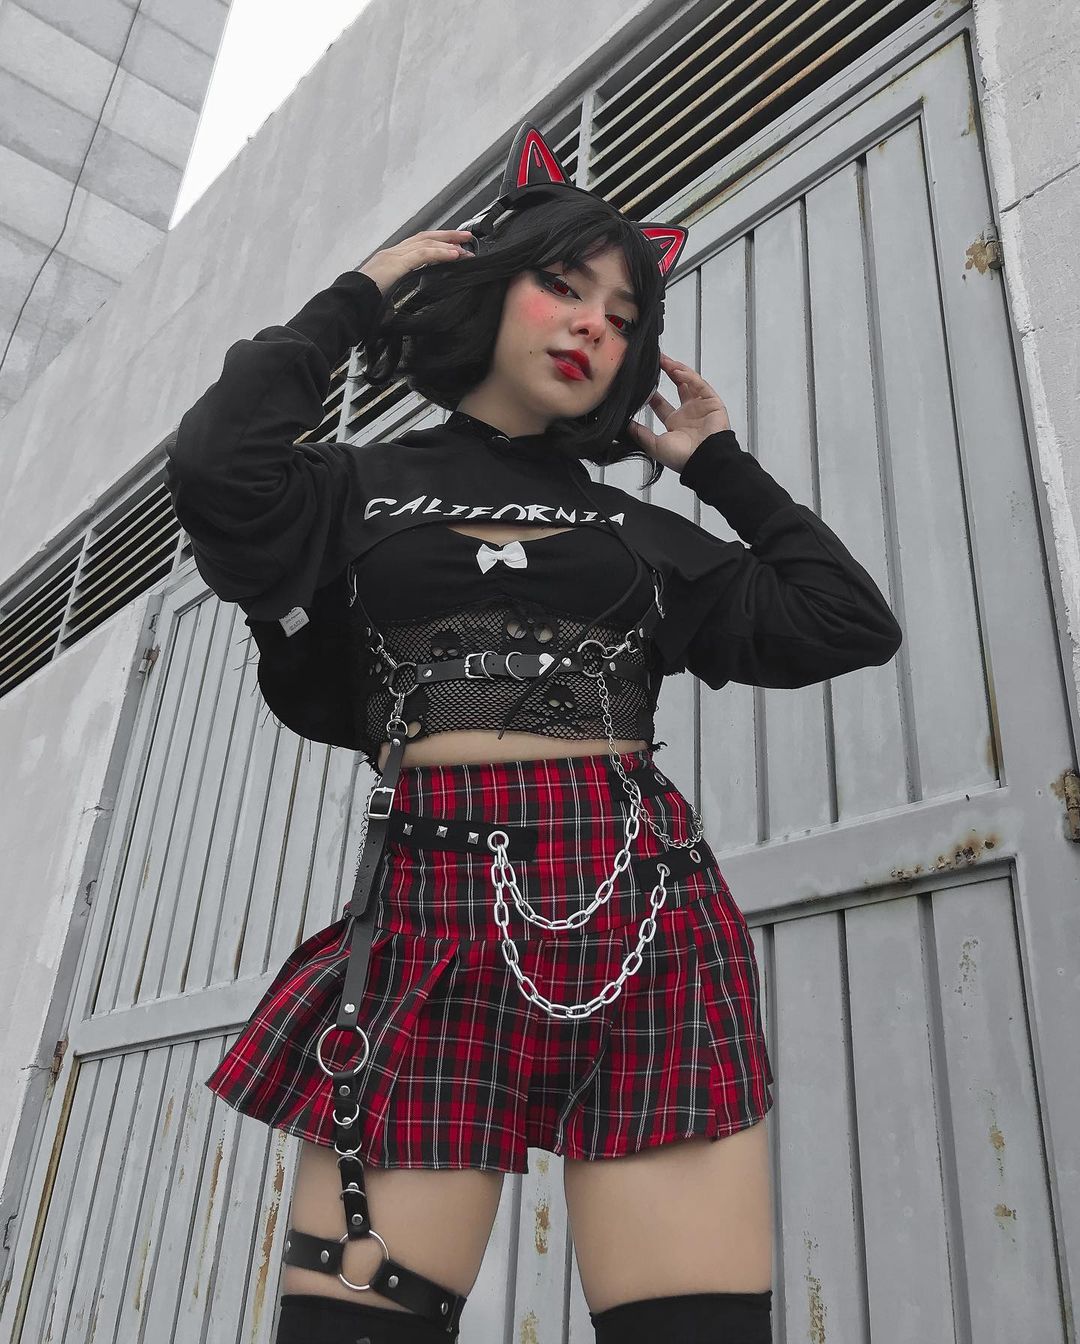 Goth Girl Fashion Style Inspiration : r/GothGirlClothing